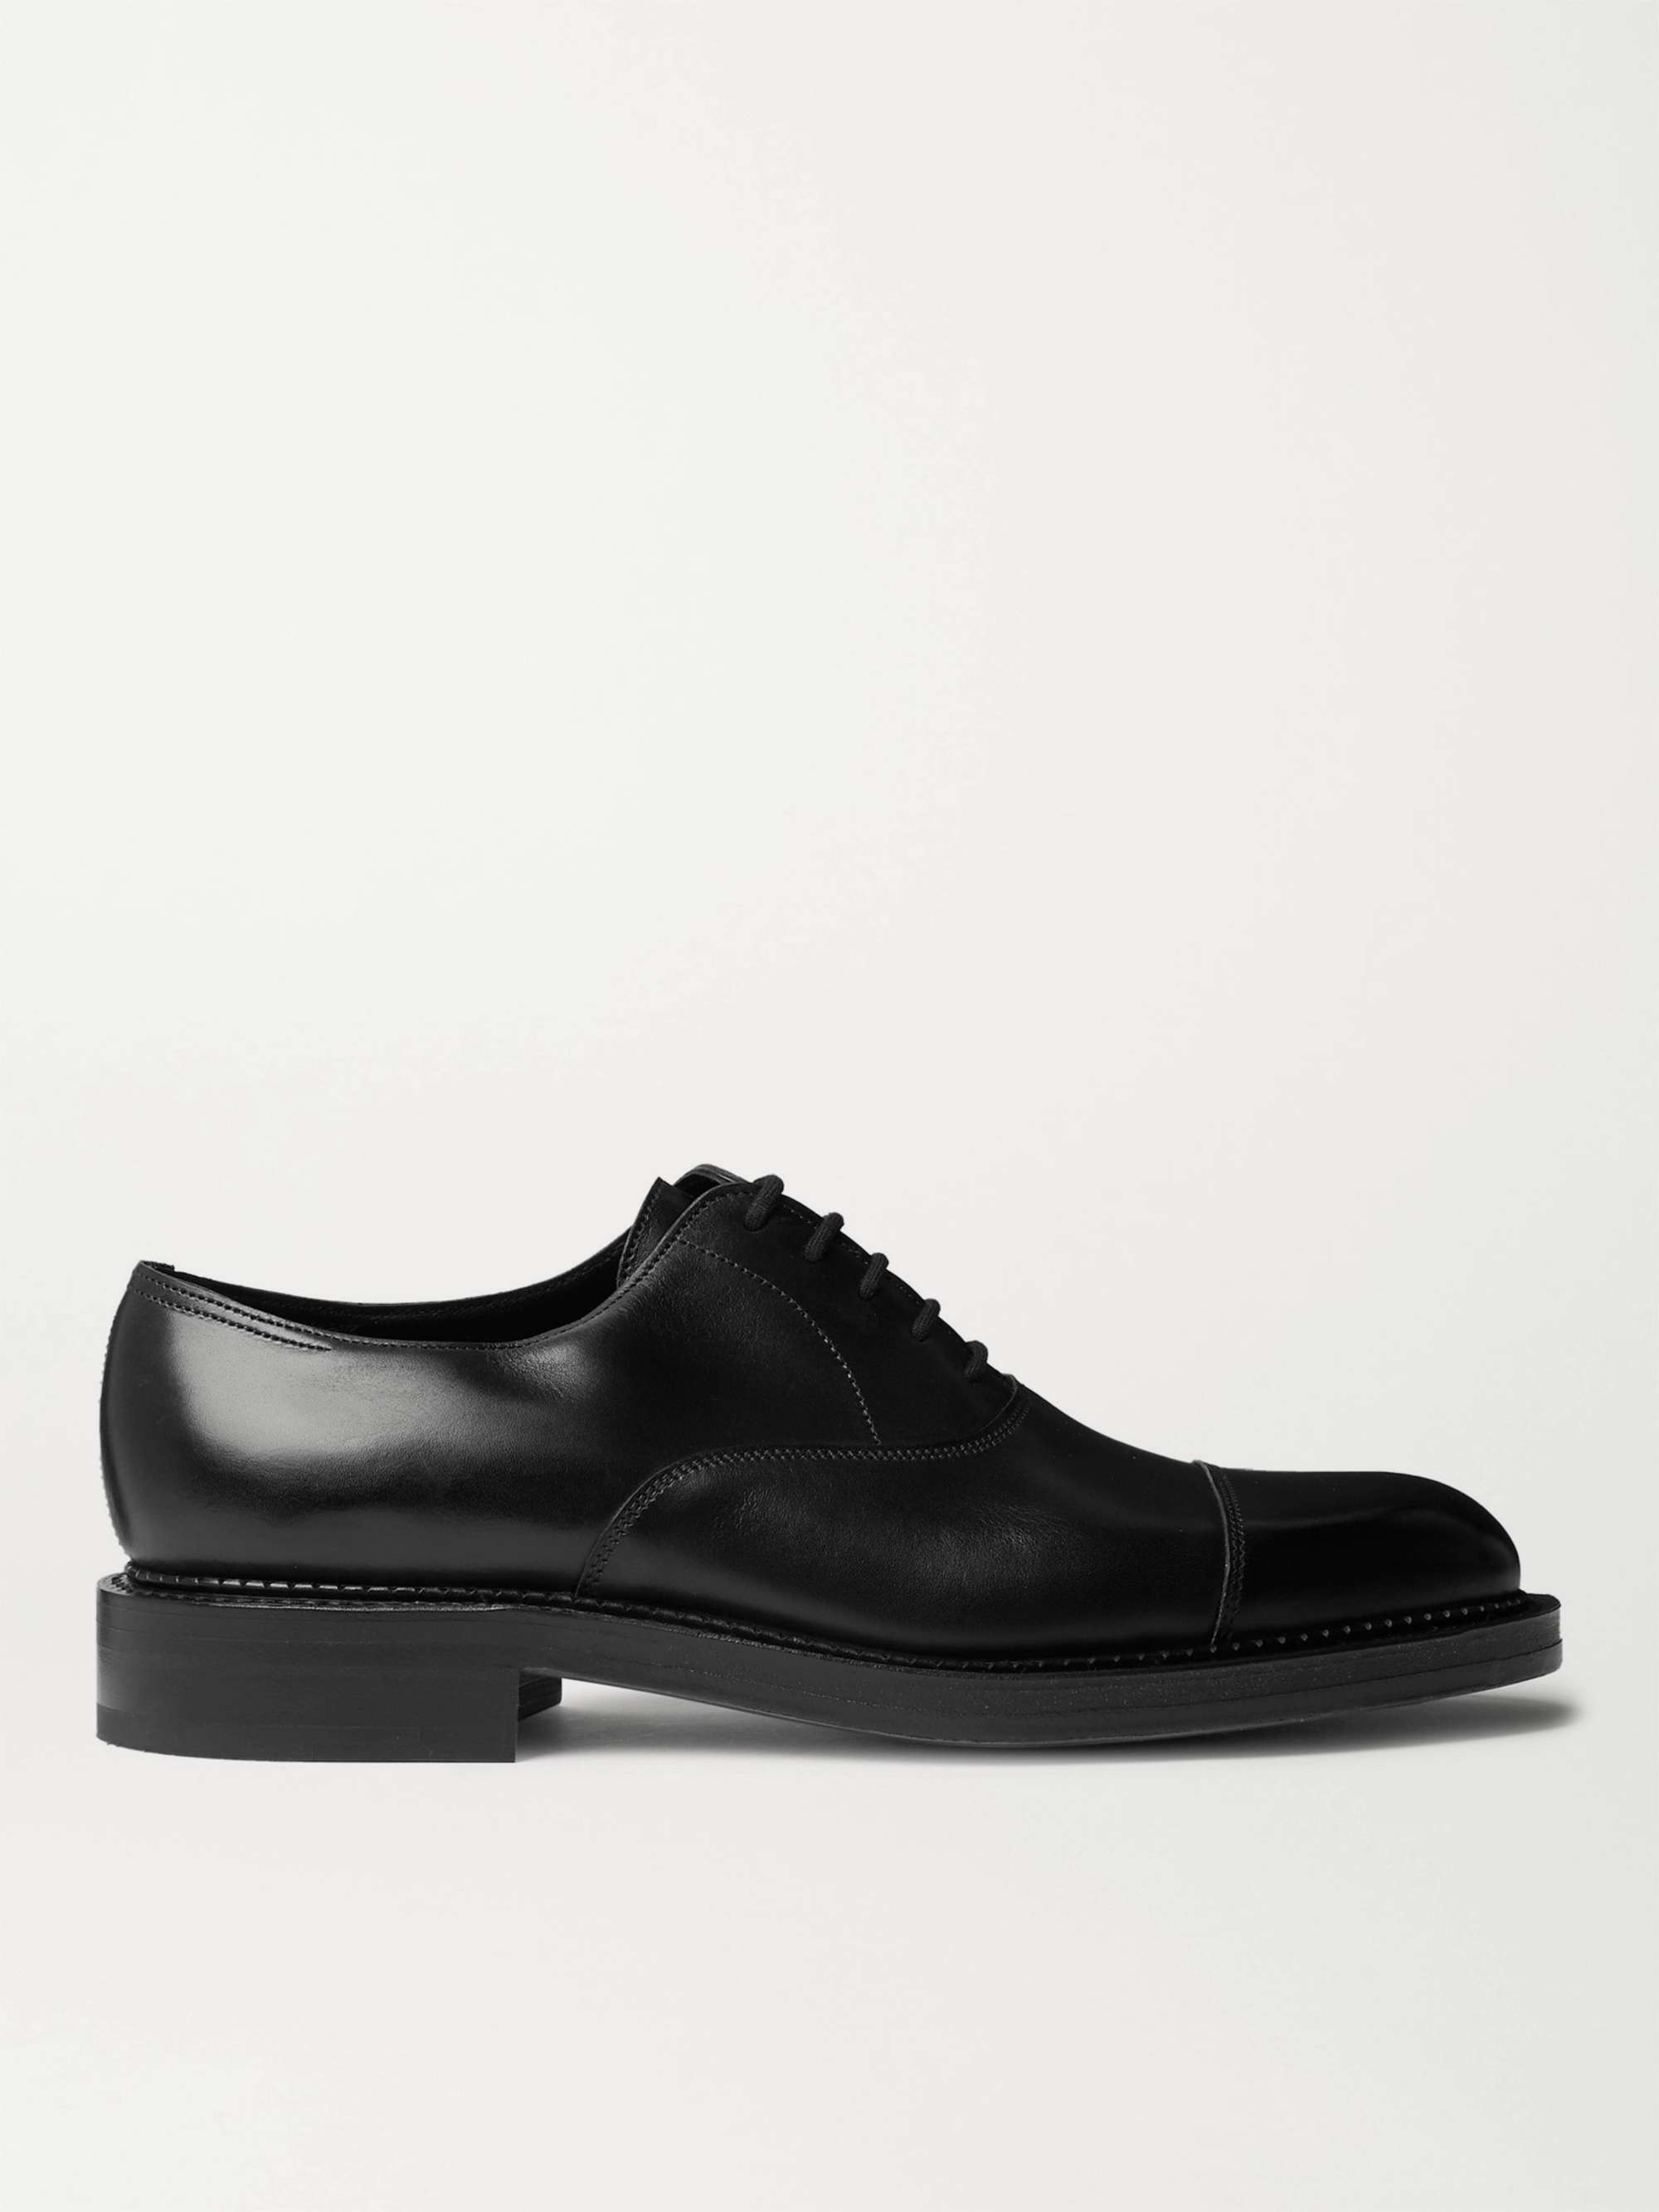 JOHN LOBB City II Leather Oxford Shoes